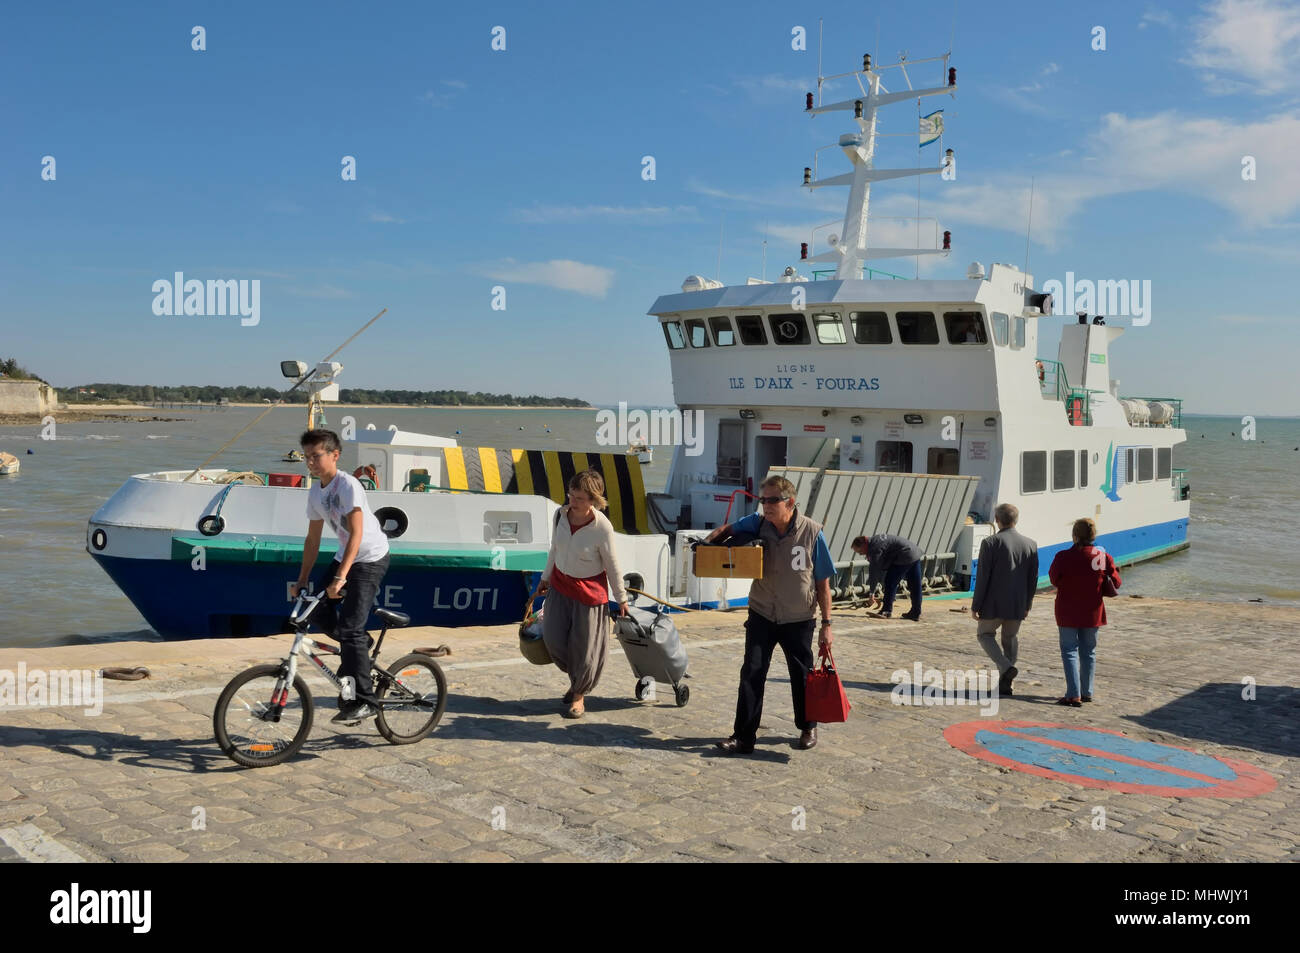 Passengers disembarking the ferry at ILE D'AIX, Nouvelle-Aquitaine, Charente-Maritime, France Stock Photo